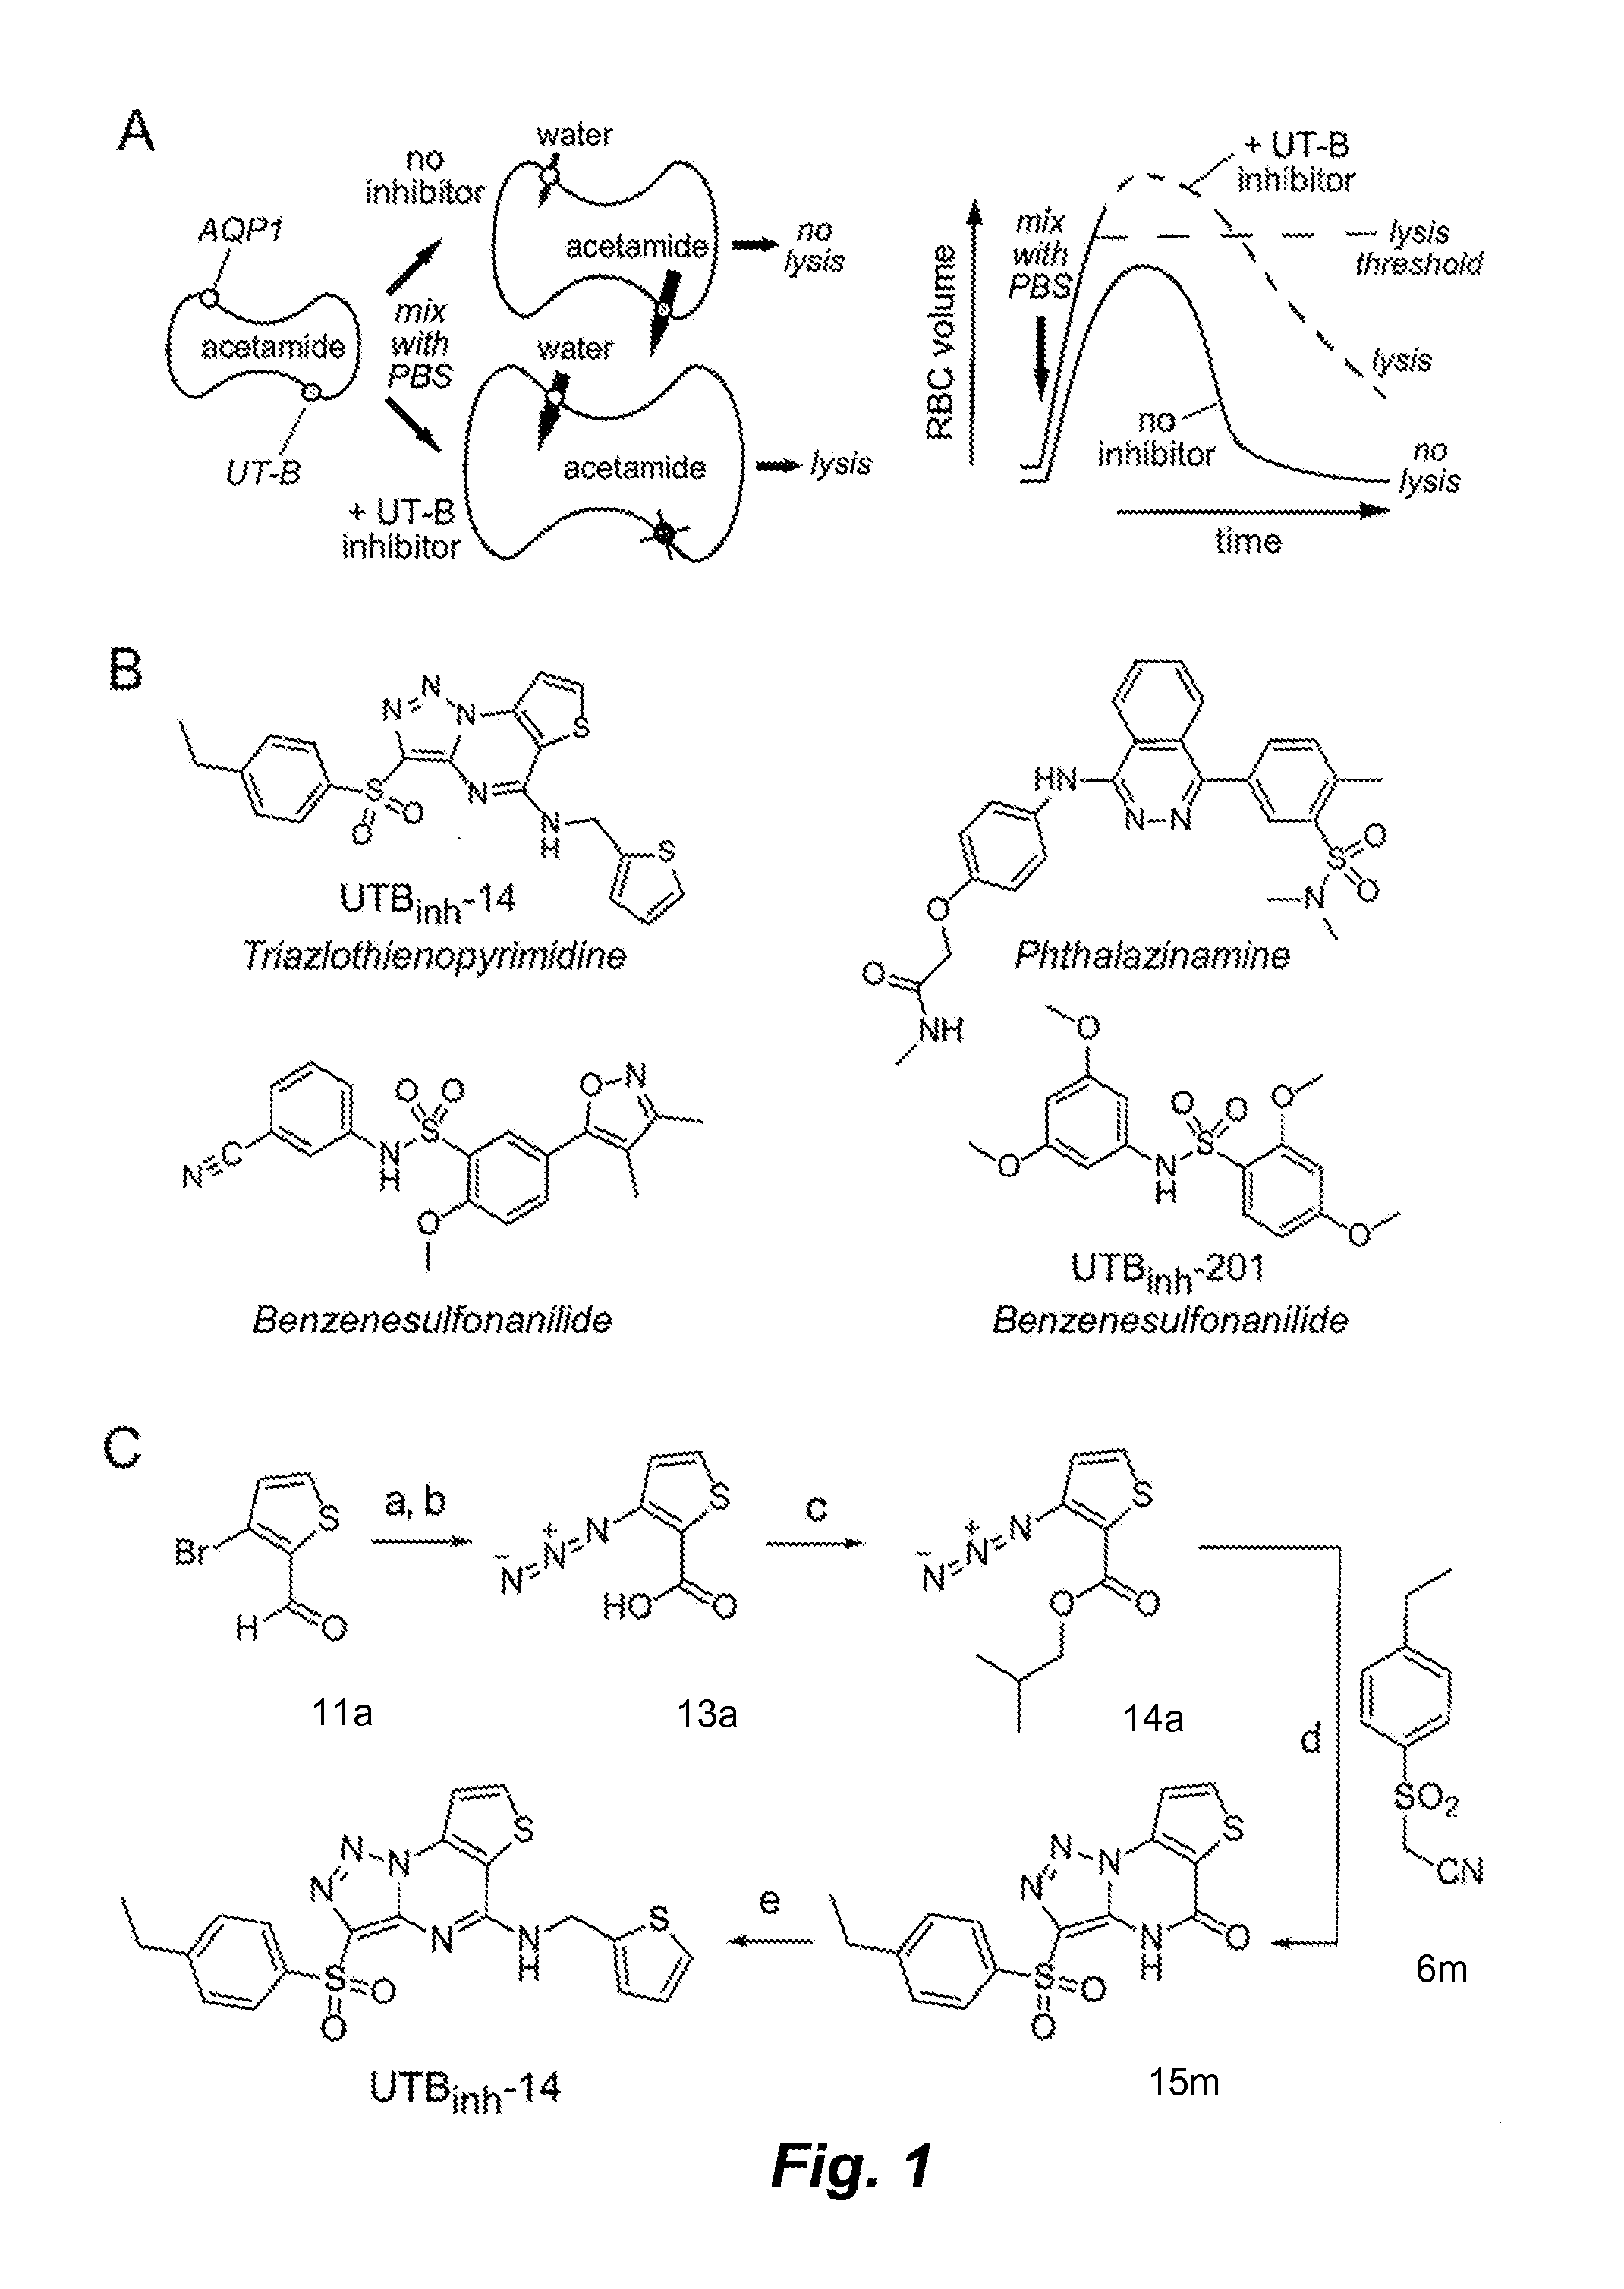 Triazolothienopyrimidine compound inhibitors of urea transporters and methods of using inhibitors